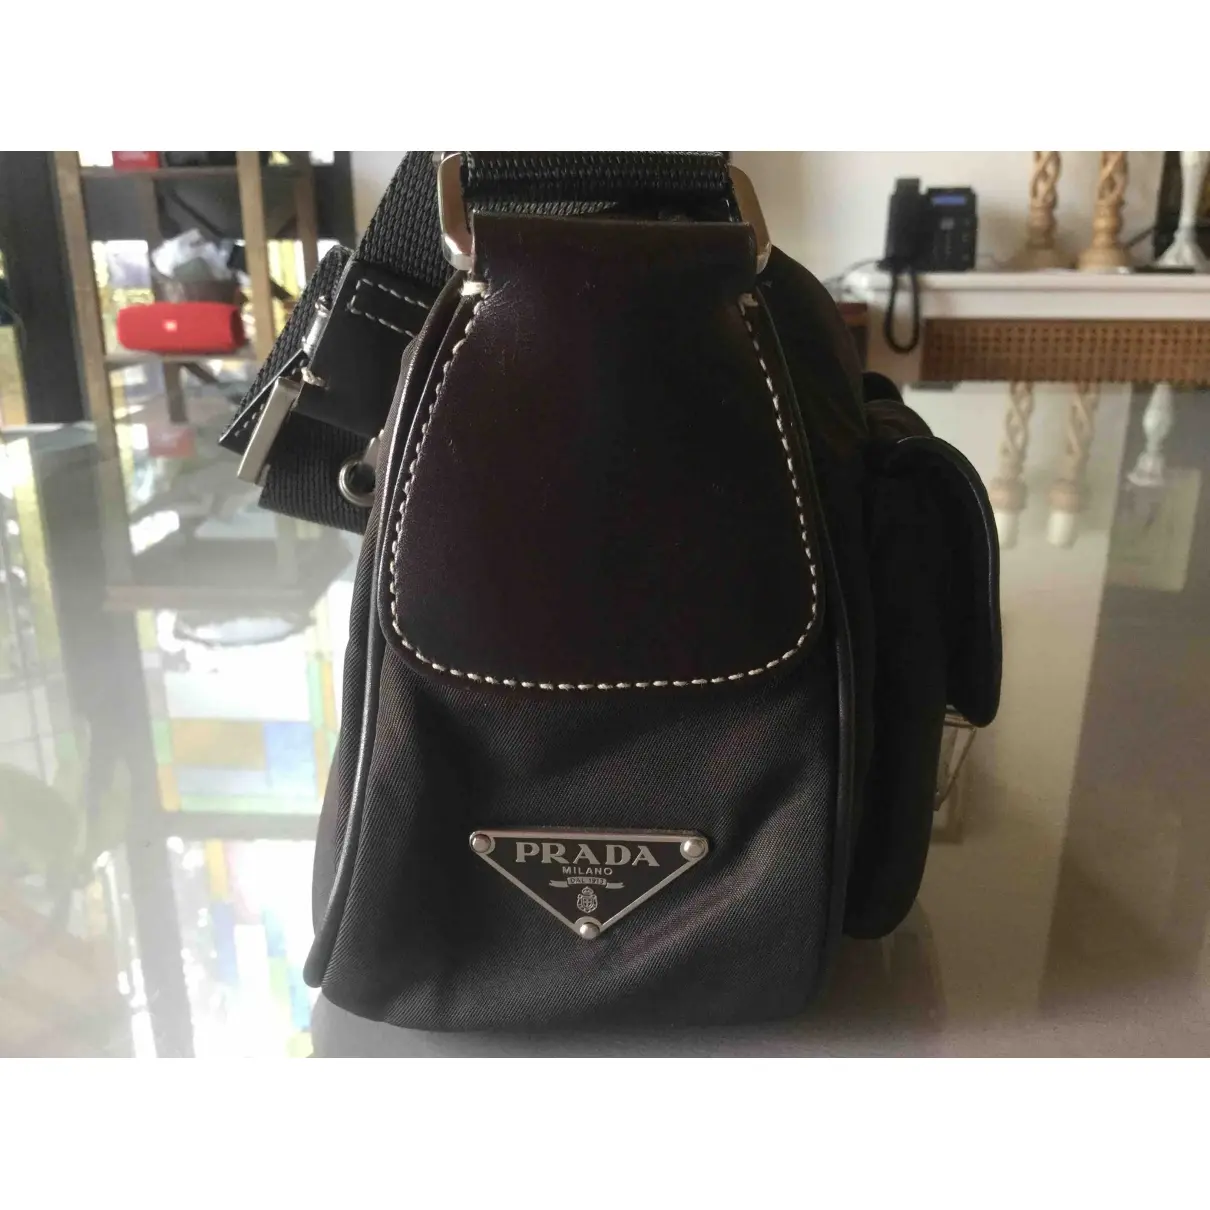 Buy Prada Tessuto handbag online